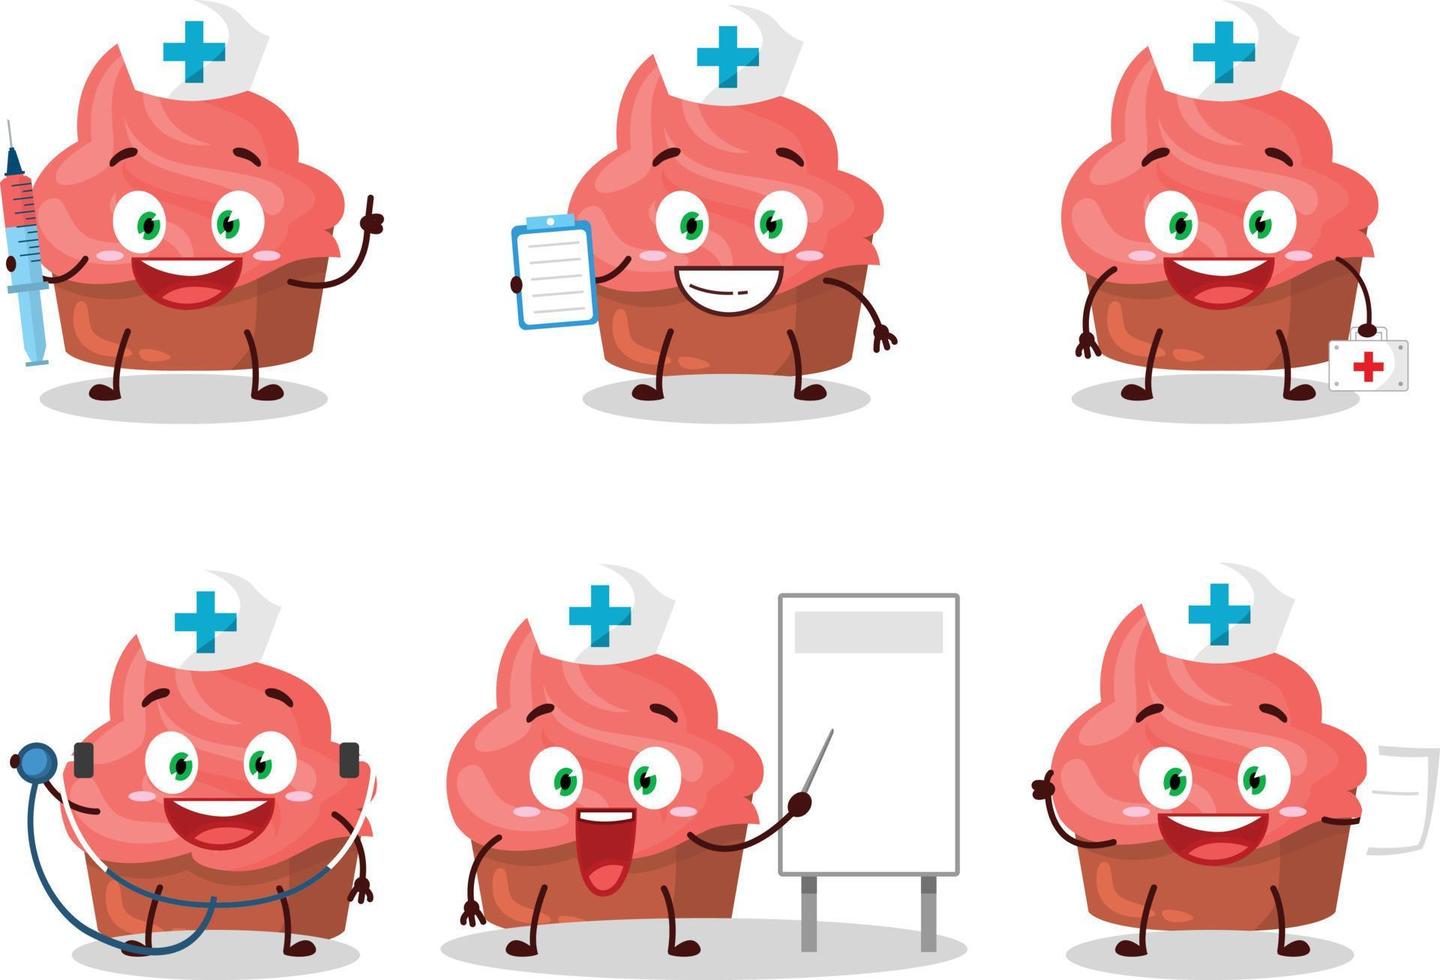 dokter beroep emoticon met aardbei taart tekenfilm karakter vector